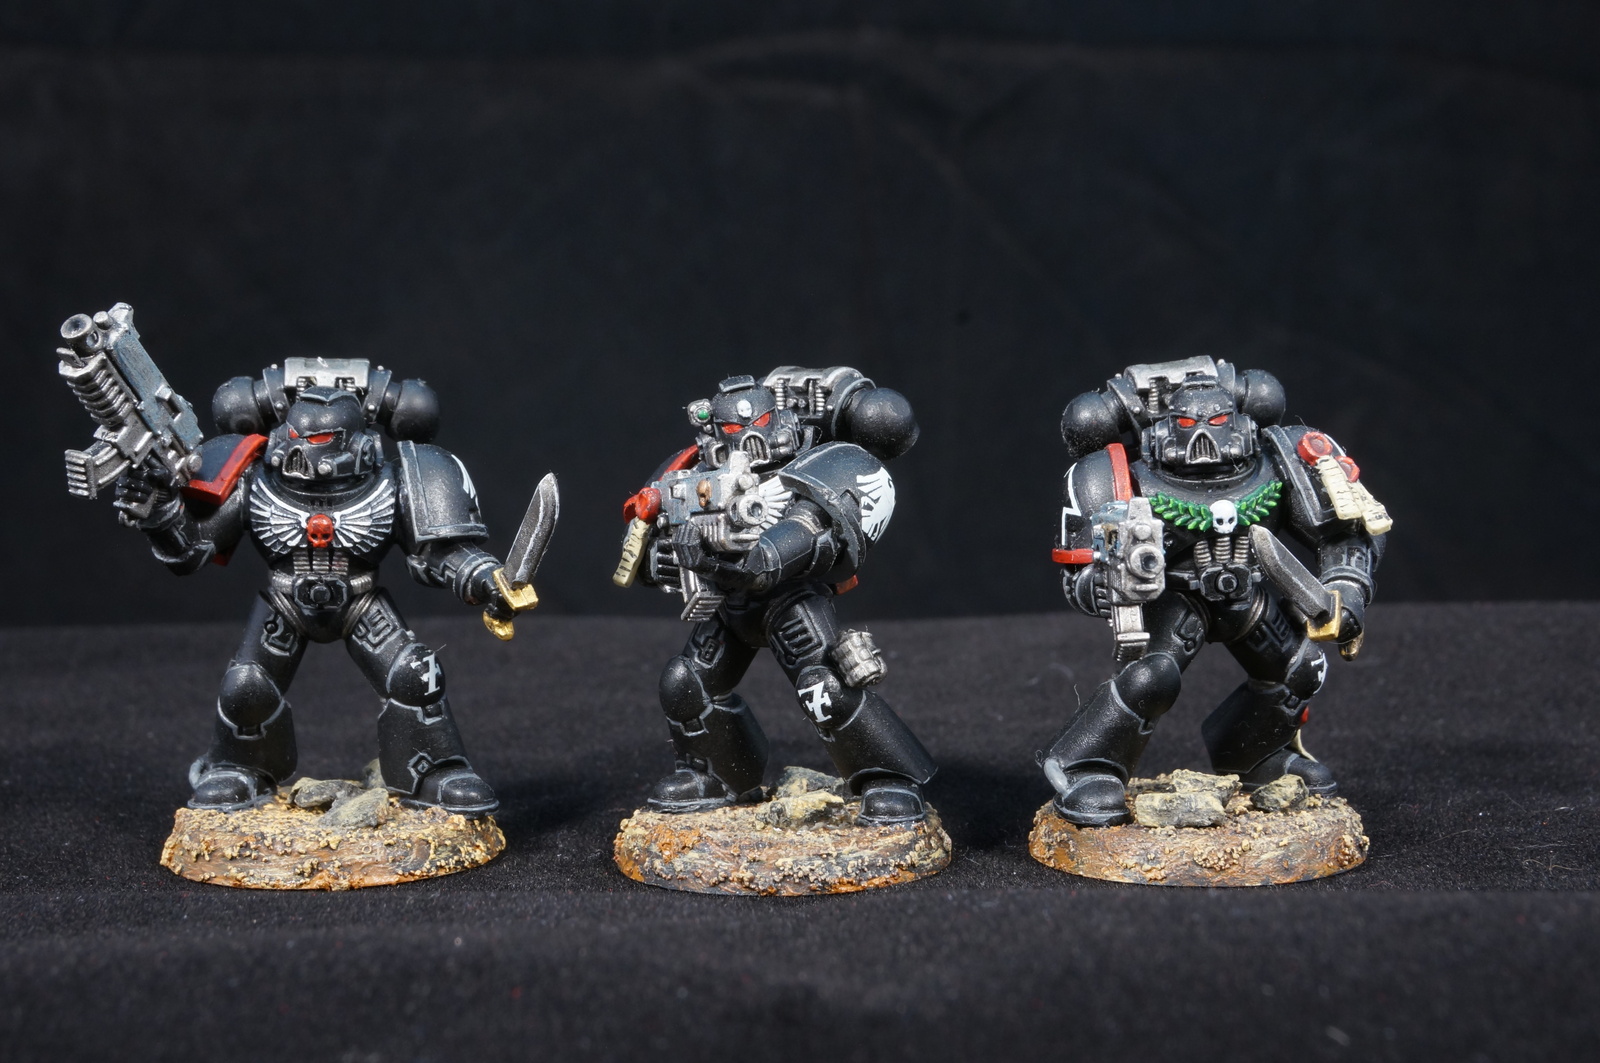 Raven Guard tactical squad - Longpost, Modeling, Miniature, Warhammer 40k, Raven guard, Wh miniatures, My